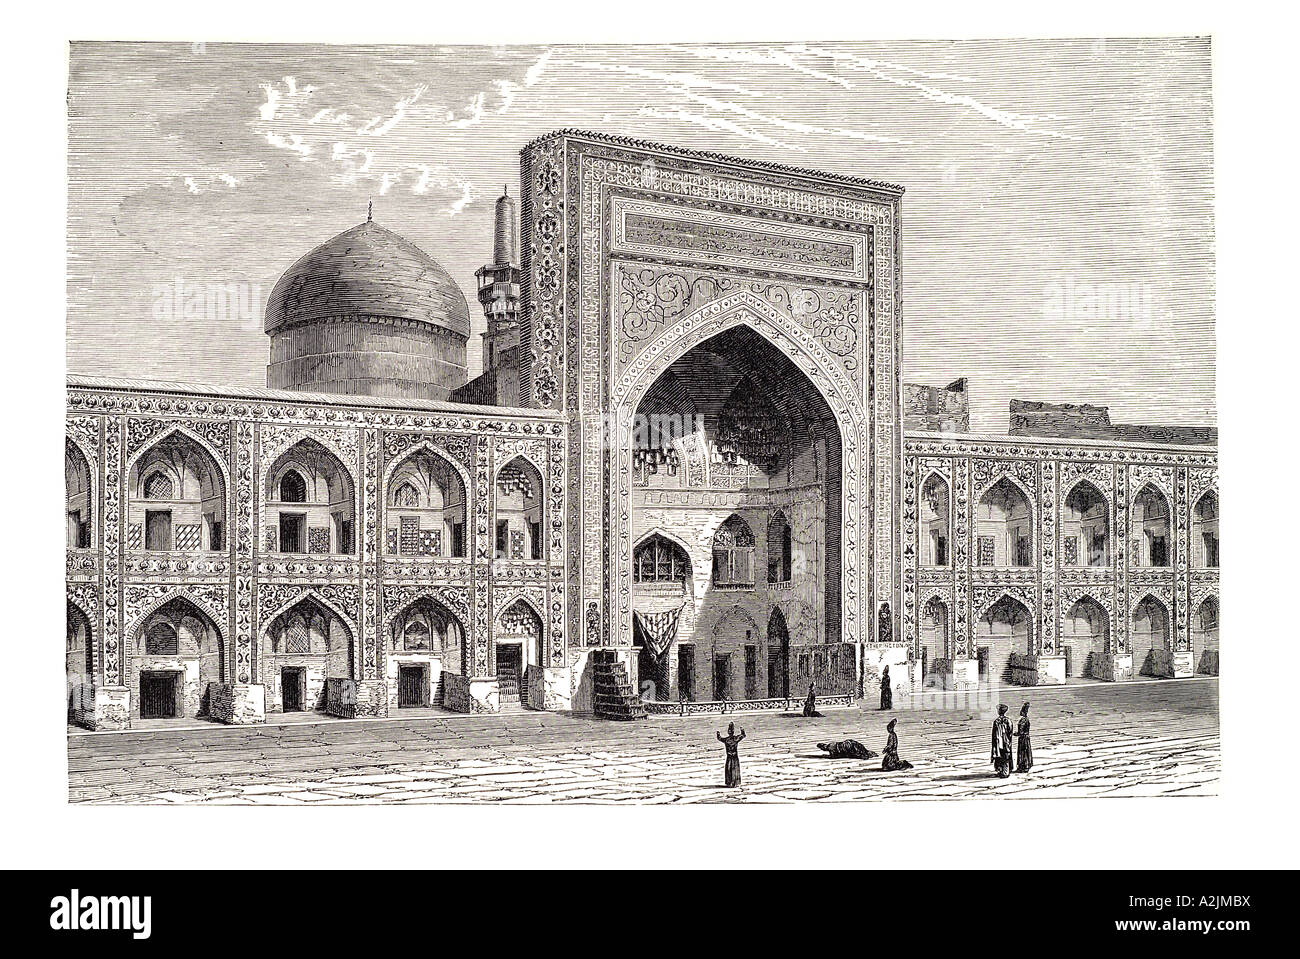 Mosquée Masjid-i e imam Shah, Isfahan, Iran royal iwan iranienne perse madrasa islam Islamic religion musulmane mosaïque carrelage orné Banque D'Images